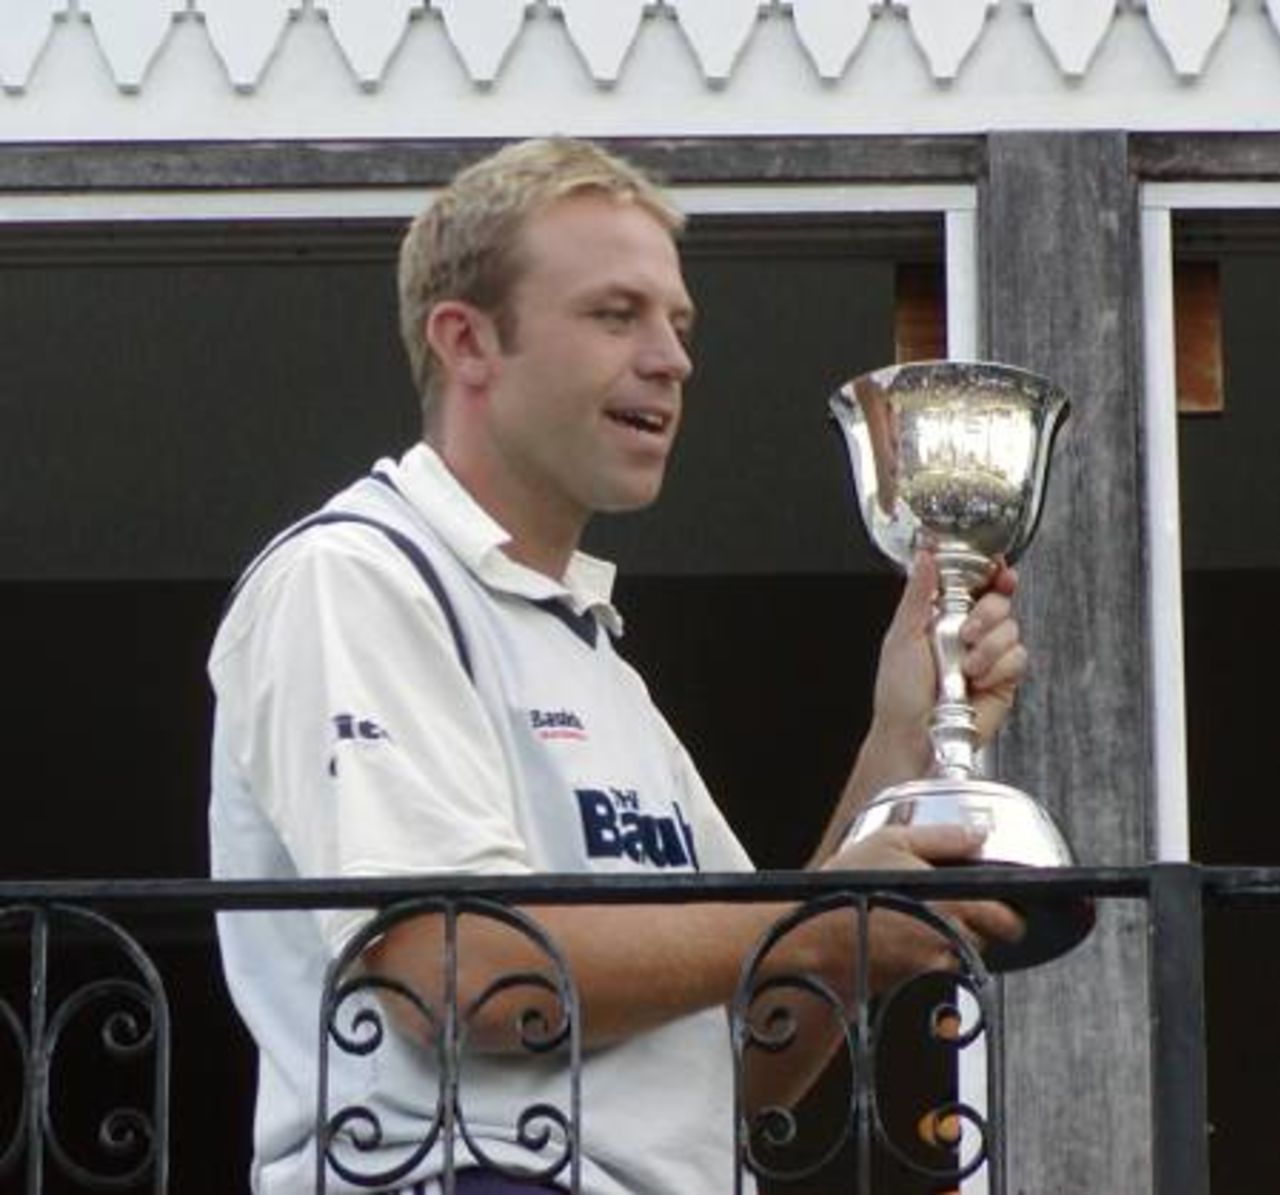 Chris Adams holds the CricInfo 2nd Division Championship trophy aloft